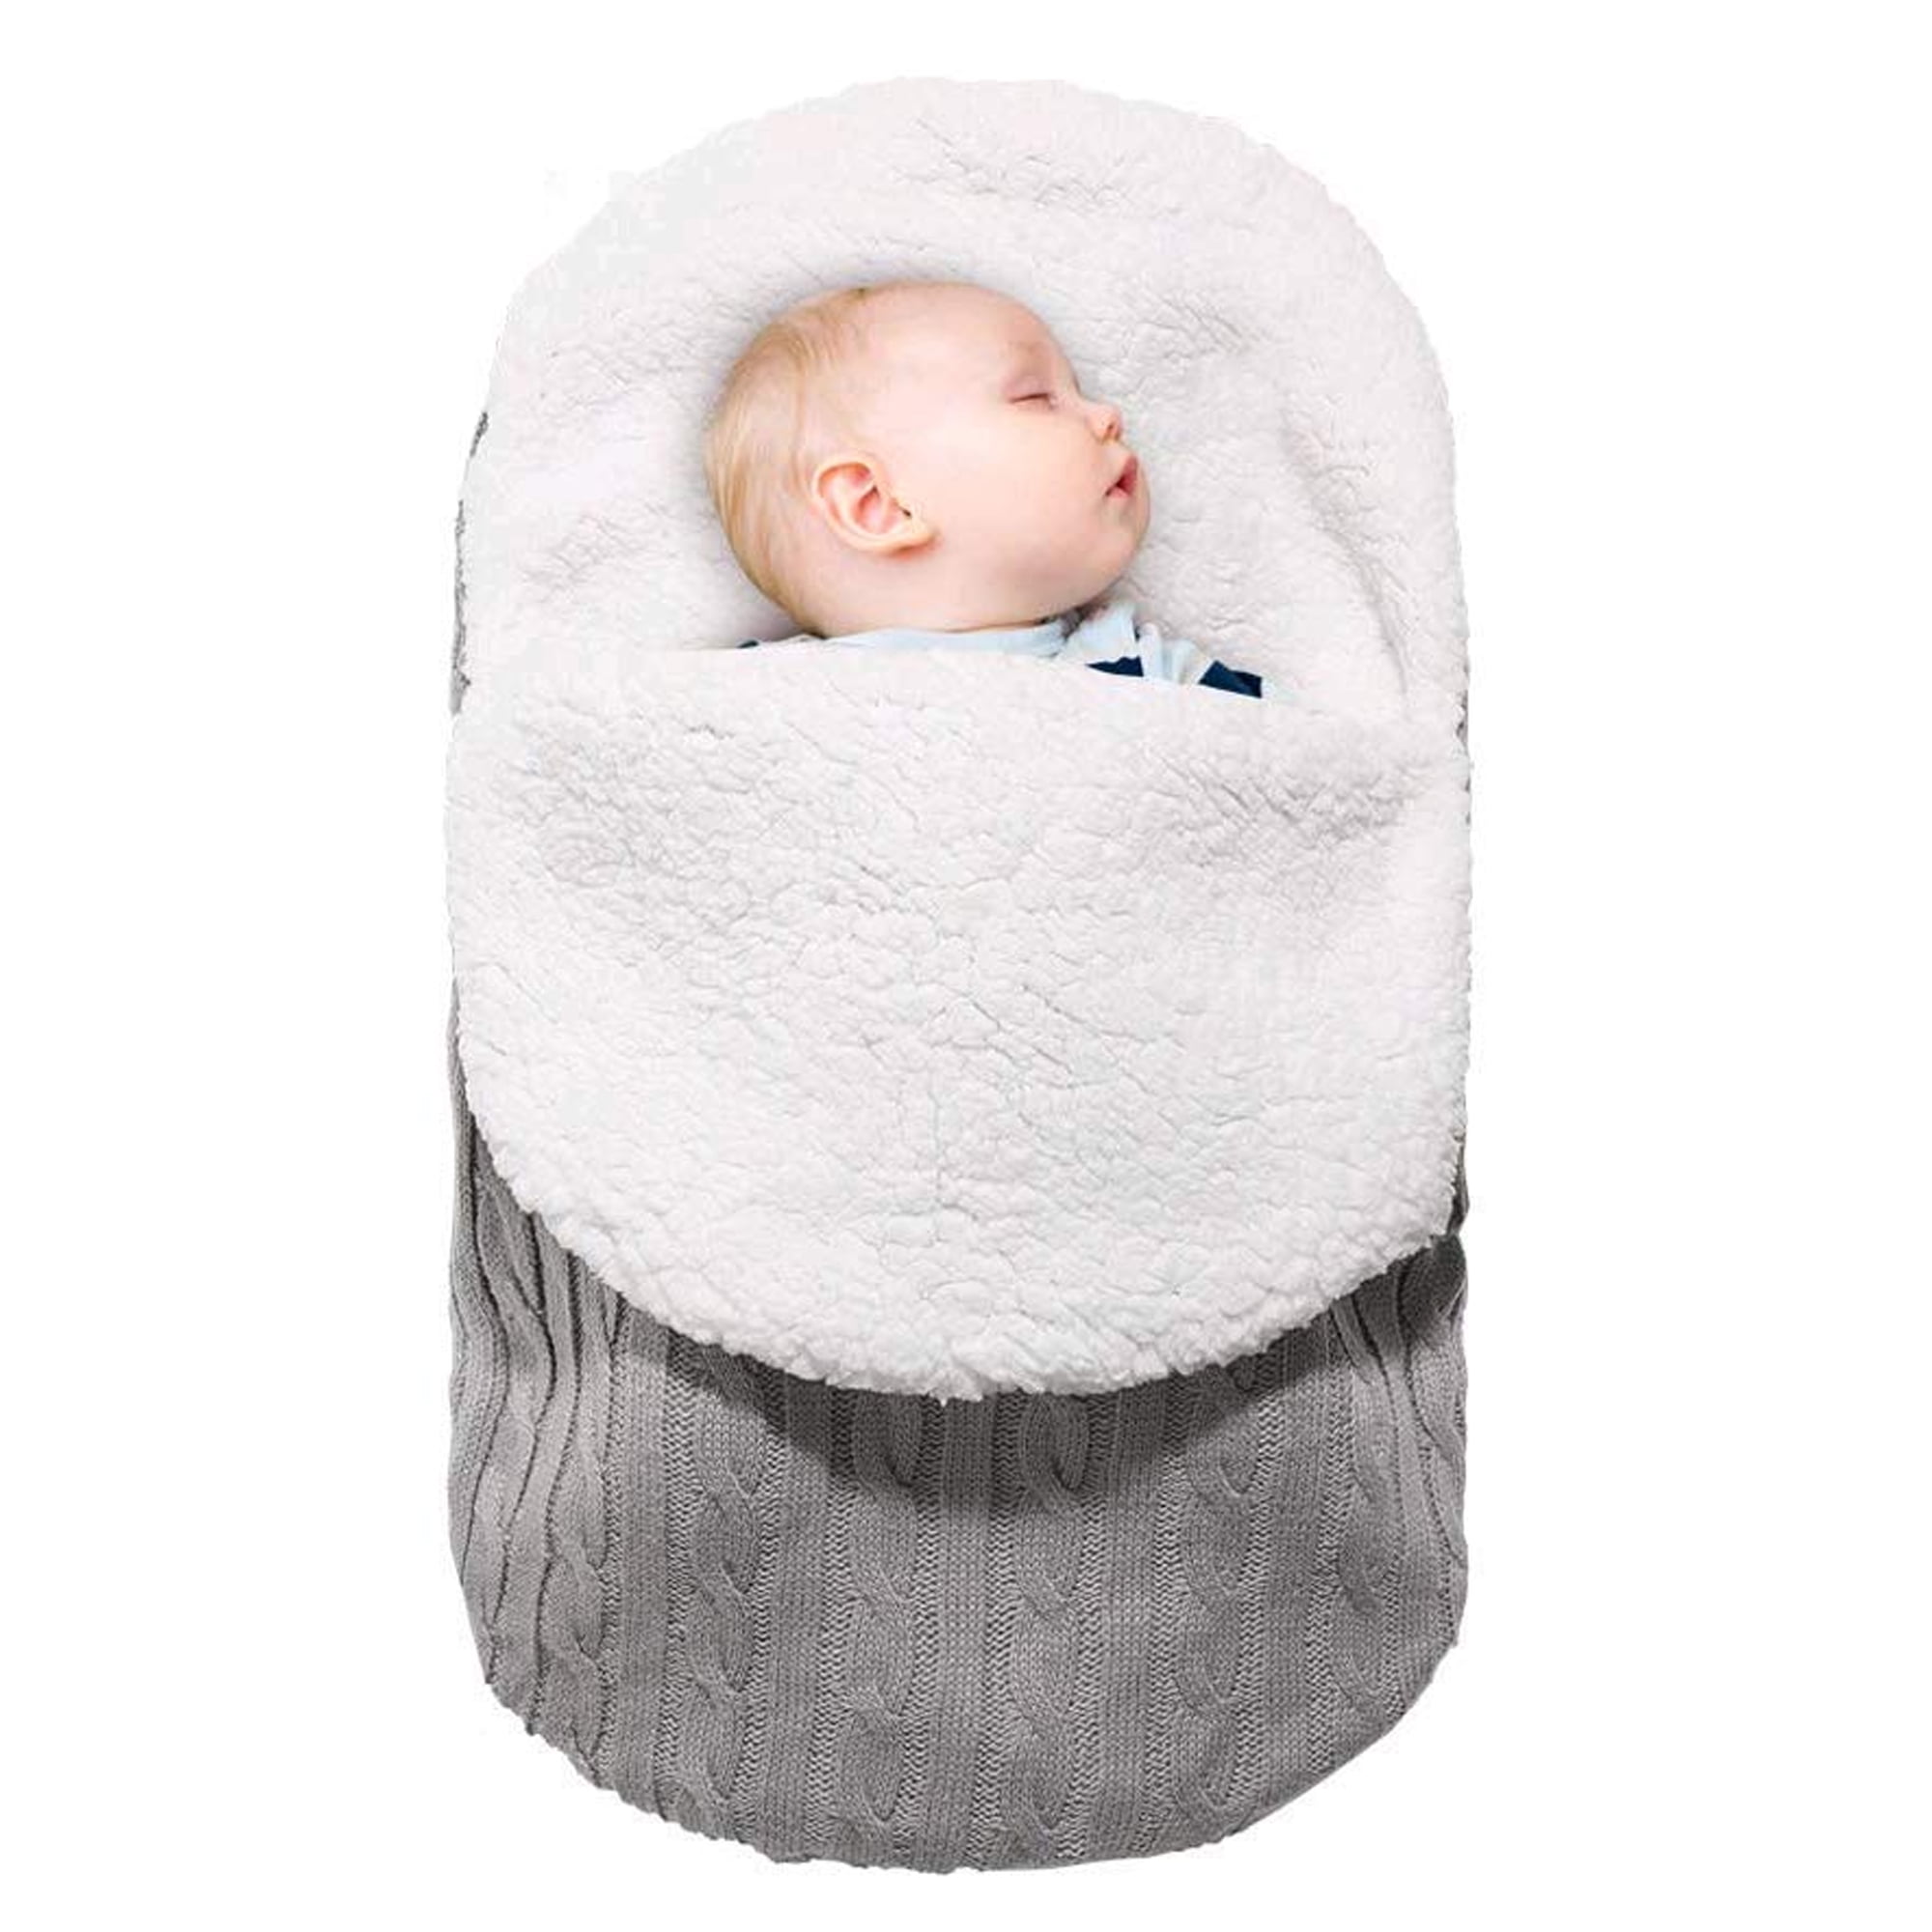 JoyFUNCastle Baby Sleeping Bag Neonatal Woven Blanket Stroller Sleeping Bag for 0-24 Months Black, 23.511.8 